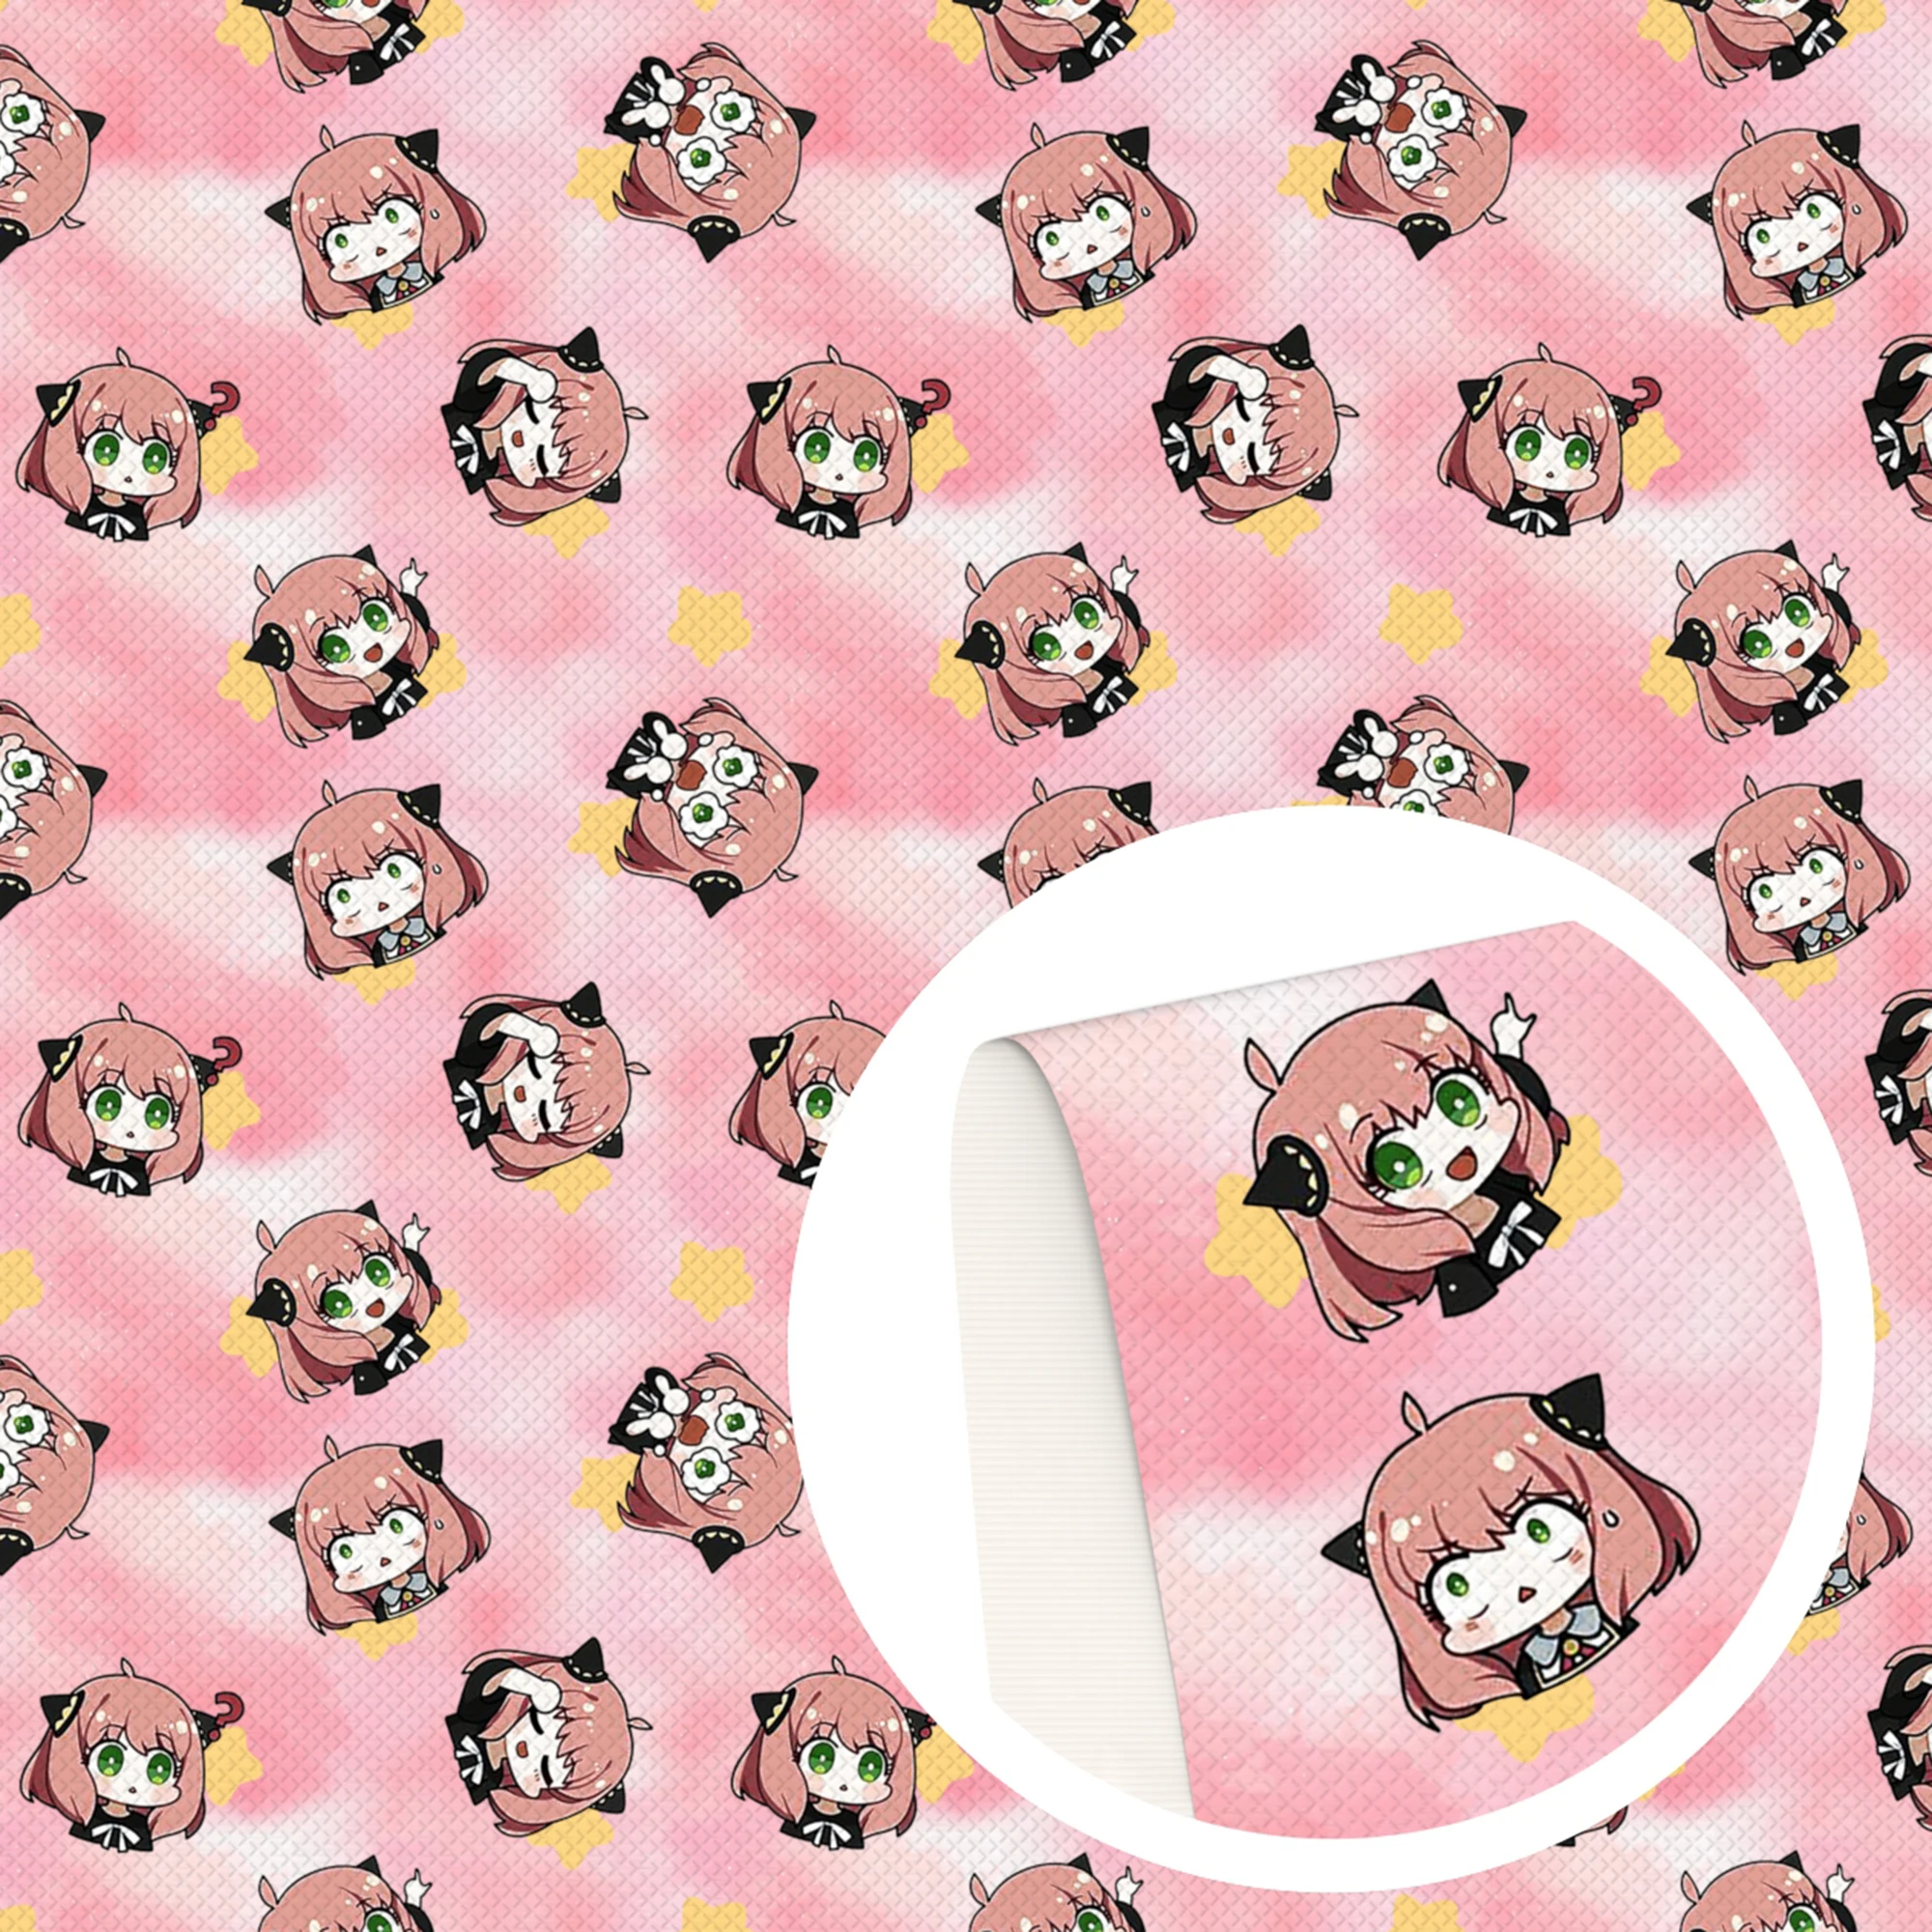 kopoo beastars-Japan Anime Fabric Wall Scroll Poster India | Ubuy